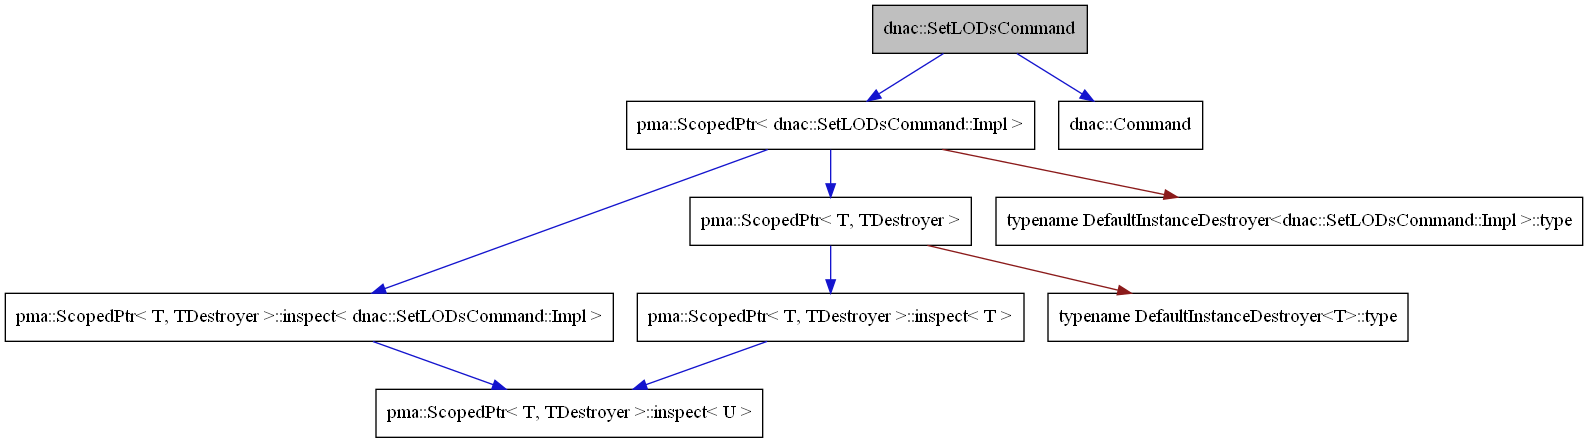 digraph {
    graph [bgcolor="#00000000"]
    node [shape=rectangle style=filled fillcolor="#FFFFFF" font=Helvetica padding=2]
    edge [color="#1414CE"]
    "3" [label="pma::ScopedPtr< dnac::SetLODsCommand::Impl >" tooltip="pma::ScopedPtr< dnac::SetLODsCommand::Impl >"]
    "2" [label="dnac::Command" tooltip="dnac::Command"]
    "1" [label="dnac::SetLODsCommand" tooltip="dnac::SetLODsCommand" fillcolor="#BFBFBF"]
    "9" [label="pma::ScopedPtr< T, TDestroyer >::inspect< T >" tooltip="pma::ScopedPtr< T, TDestroyer >::inspect< T >"]
    "5" [label="pma::ScopedPtr< T, TDestroyer >::inspect< dnac::SetLODsCommand::Impl >" tooltip="pma::ScopedPtr< T, TDestroyer >::inspect< dnac::SetLODsCommand::Impl >"]
    "7" [label="pma::ScopedPtr< T, TDestroyer >" tooltip="pma::ScopedPtr< T, TDestroyer >"]
    "6" [label="pma::ScopedPtr< T, TDestroyer >::inspect< U >" tooltip="pma::ScopedPtr< T, TDestroyer >::inspect< U >"]
    "8" [label="typename DefaultInstanceDestroyer<T>::type" tooltip="typename DefaultInstanceDestroyer<T>::type"]
    "4" [label="typename DefaultInstanceDestroyer<dnac::SetLODsCommand::Impl >::type" tooltip="typename DefaultInstanceDestroyer<dnac::SetLODsCommand::Impl >::type"]
    "3" -> "4" [dir=forward tooltip="private-inheritance" color="#8B1A1A"]
    "3" -> "5" [dir=forward tooltip="usage"]
    "3" -> "7" [dir=forward tooltip="template-instance"]
    "1" -> "2" [dir=forward tooltip="public-inheritance"]
    "1" -> "3" [dir=forward tooltip="usage"]
    "9" -> "6" [dir=forward tooltip="template-instance"]
    "5" -> "6" [dir=forward tooltip="template-instance"]
    "7" -> "8" [dir=forward tooltip="private-inheritance" color="#8B1A1A"]
    "7" -> "9" [dir=forward tooltip="usage"]
}